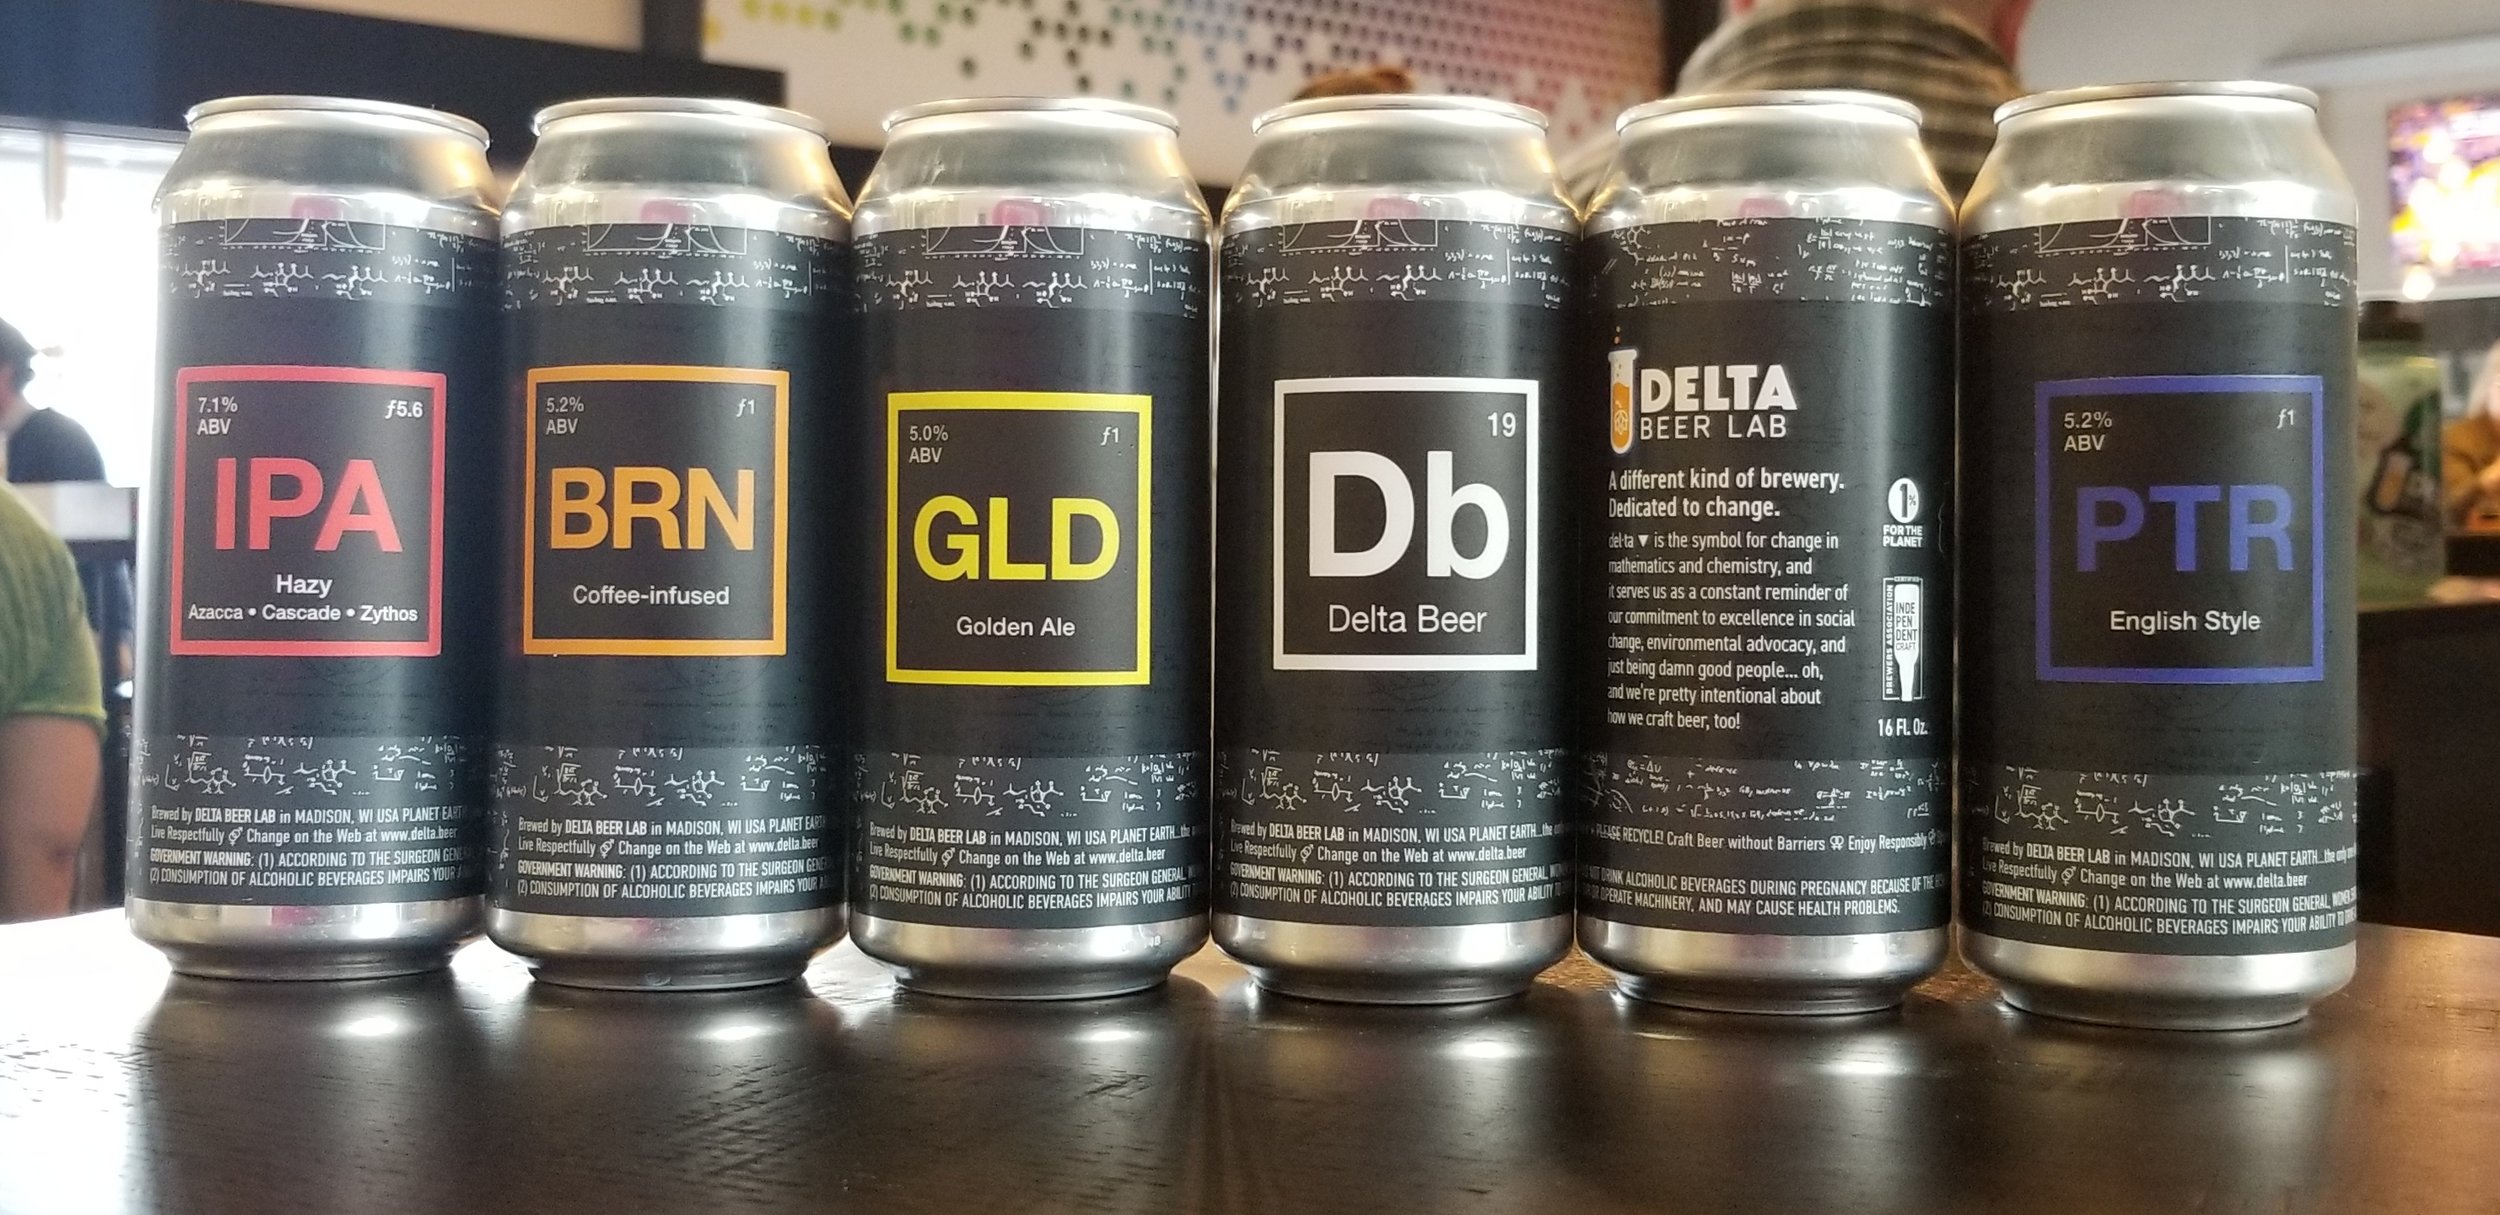 Delta Beer Lab Cans